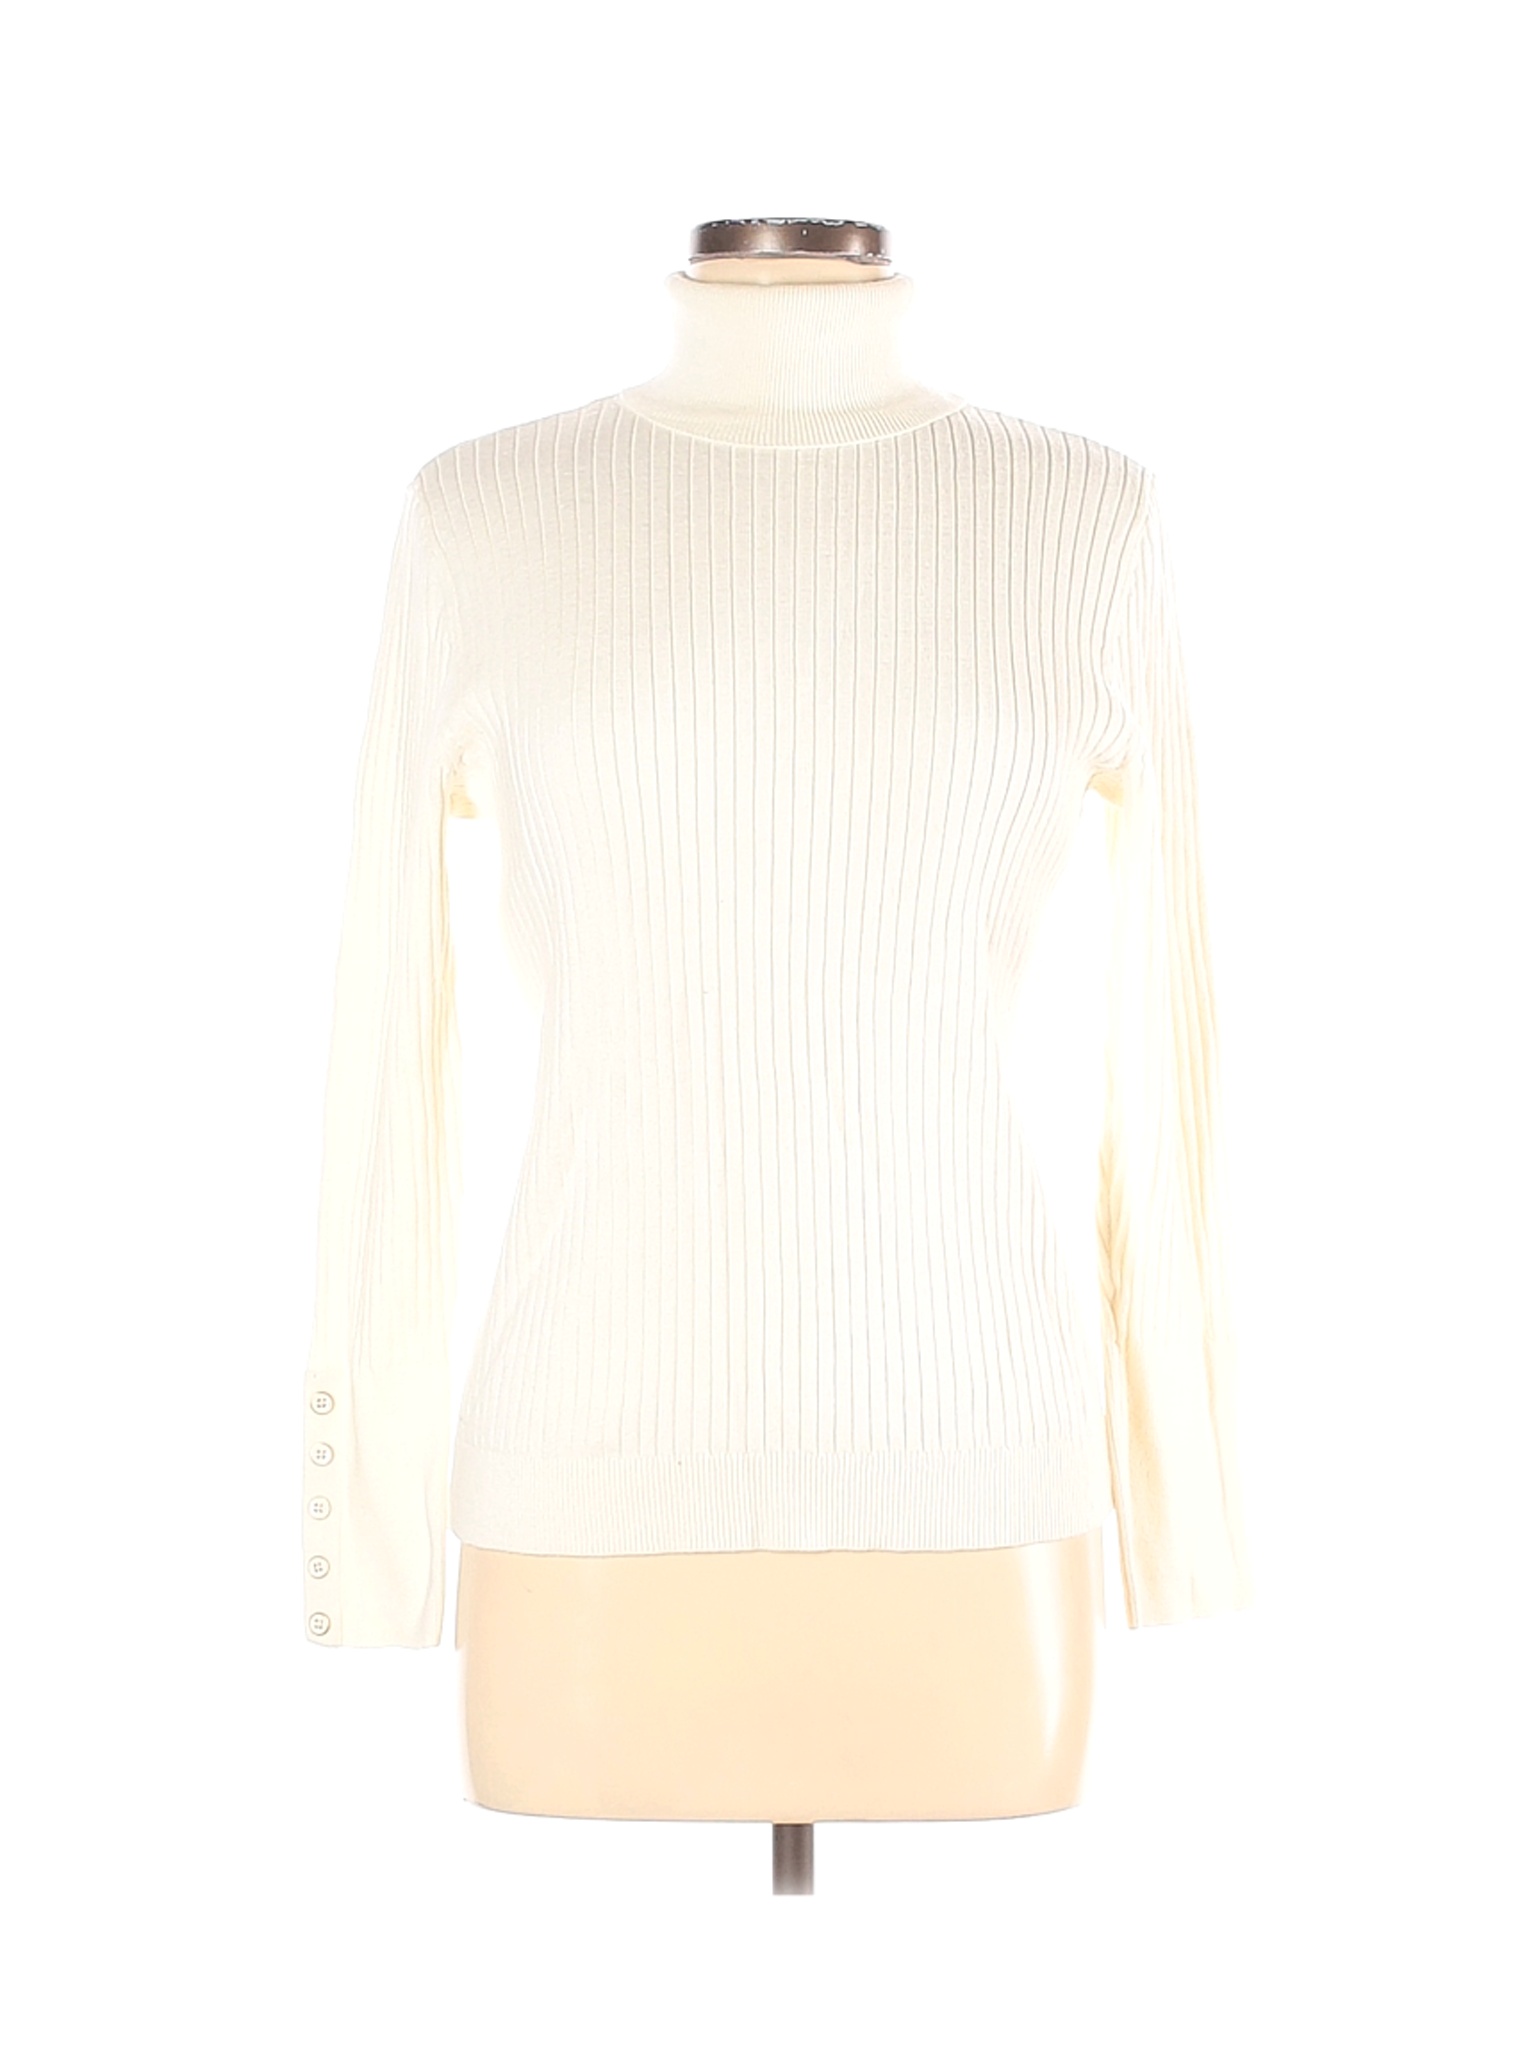 Talbots Women White Turtleneck Sweater M | eBay